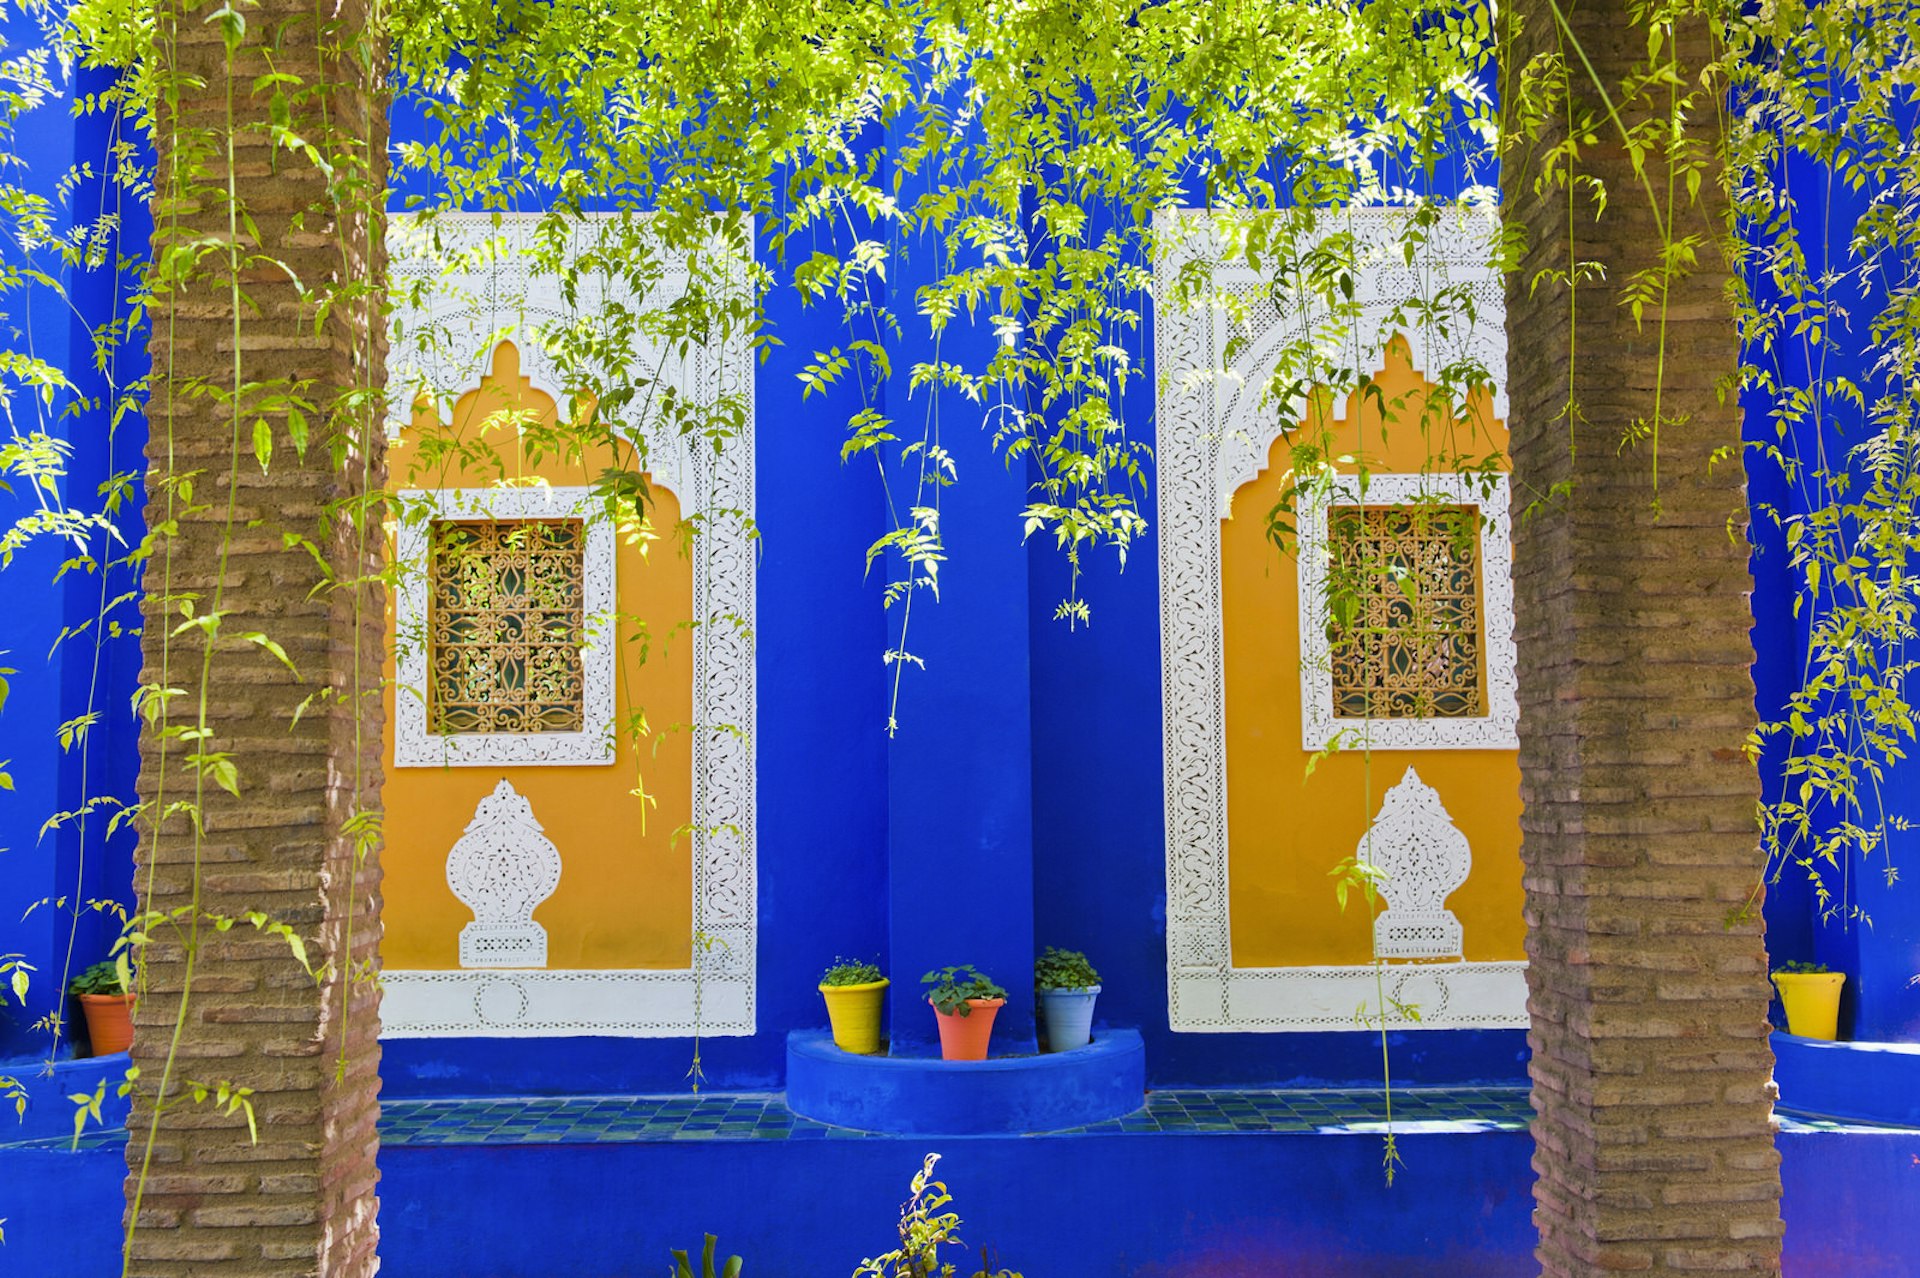 The beautiful blue house in Jardin Majorelle (Majorelle Gardens) in Marrakesh, Morocco